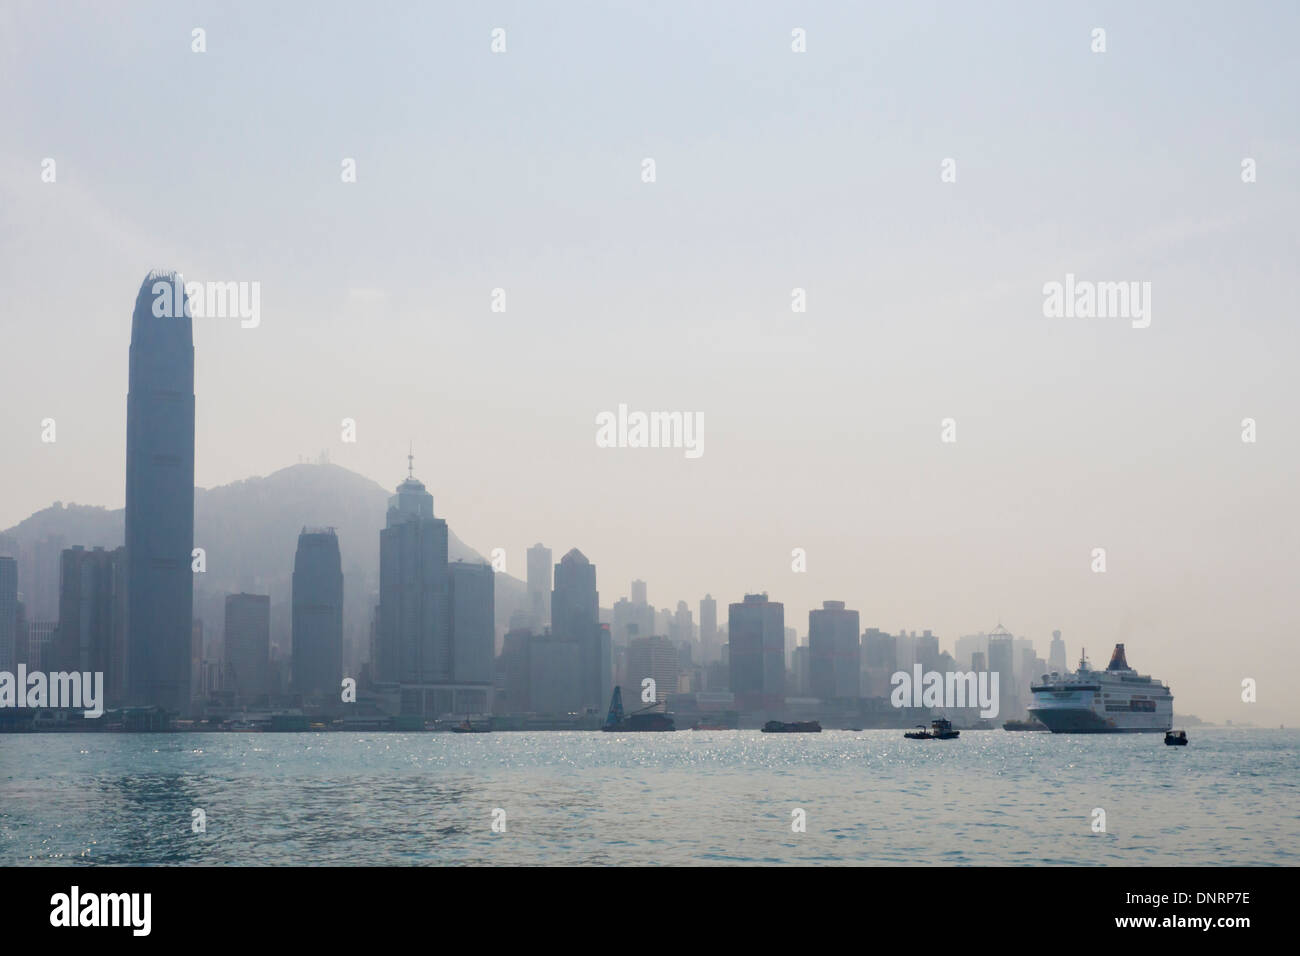 Skyscrapers on Hong Kong island, China Stock Photo